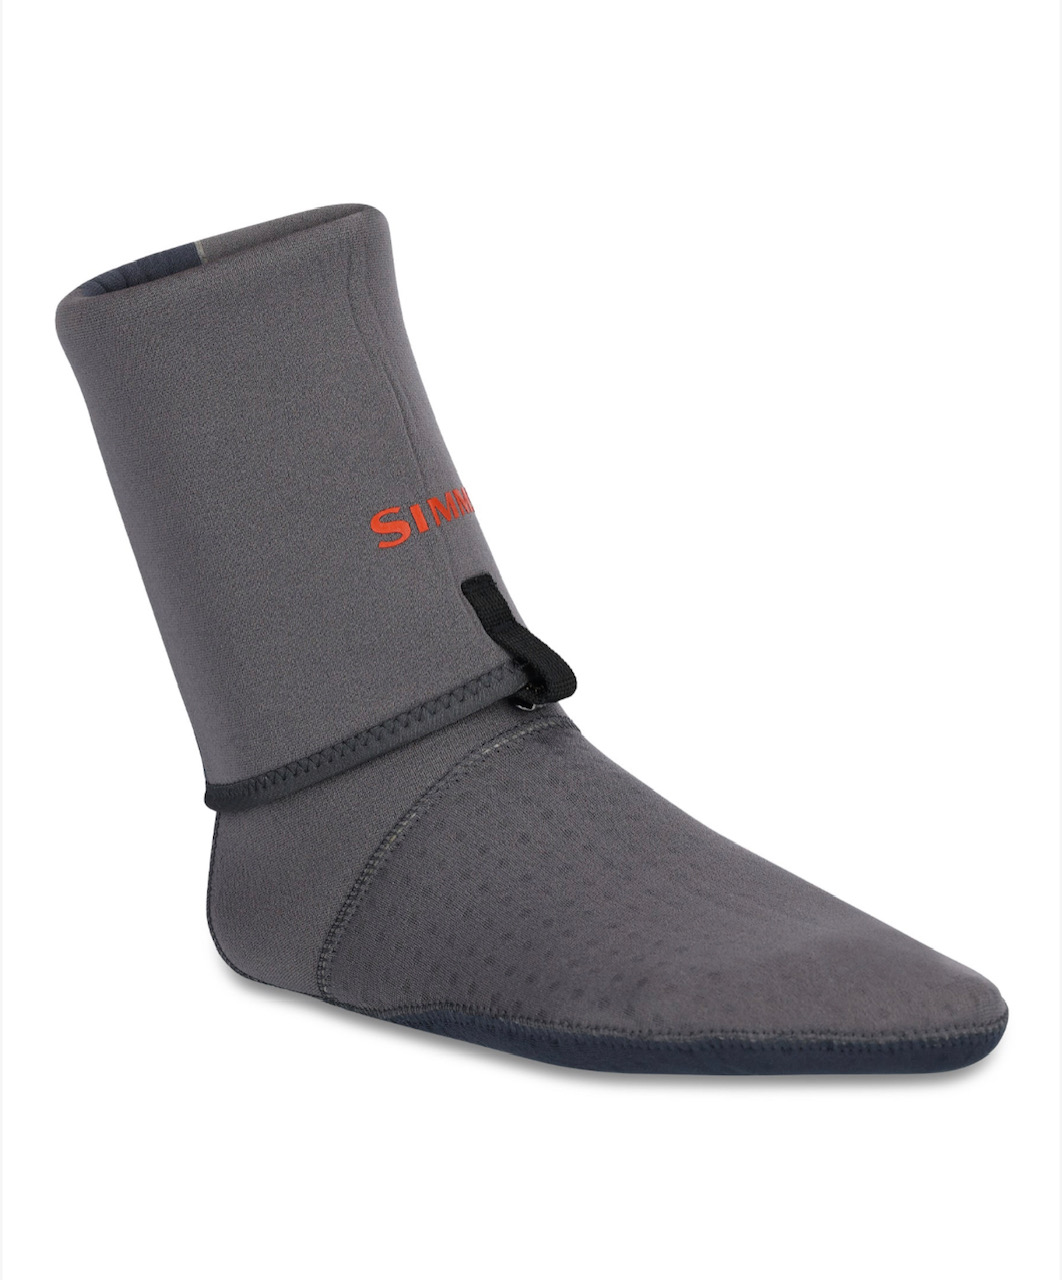 Simms M's Guide Guard Socks - Large